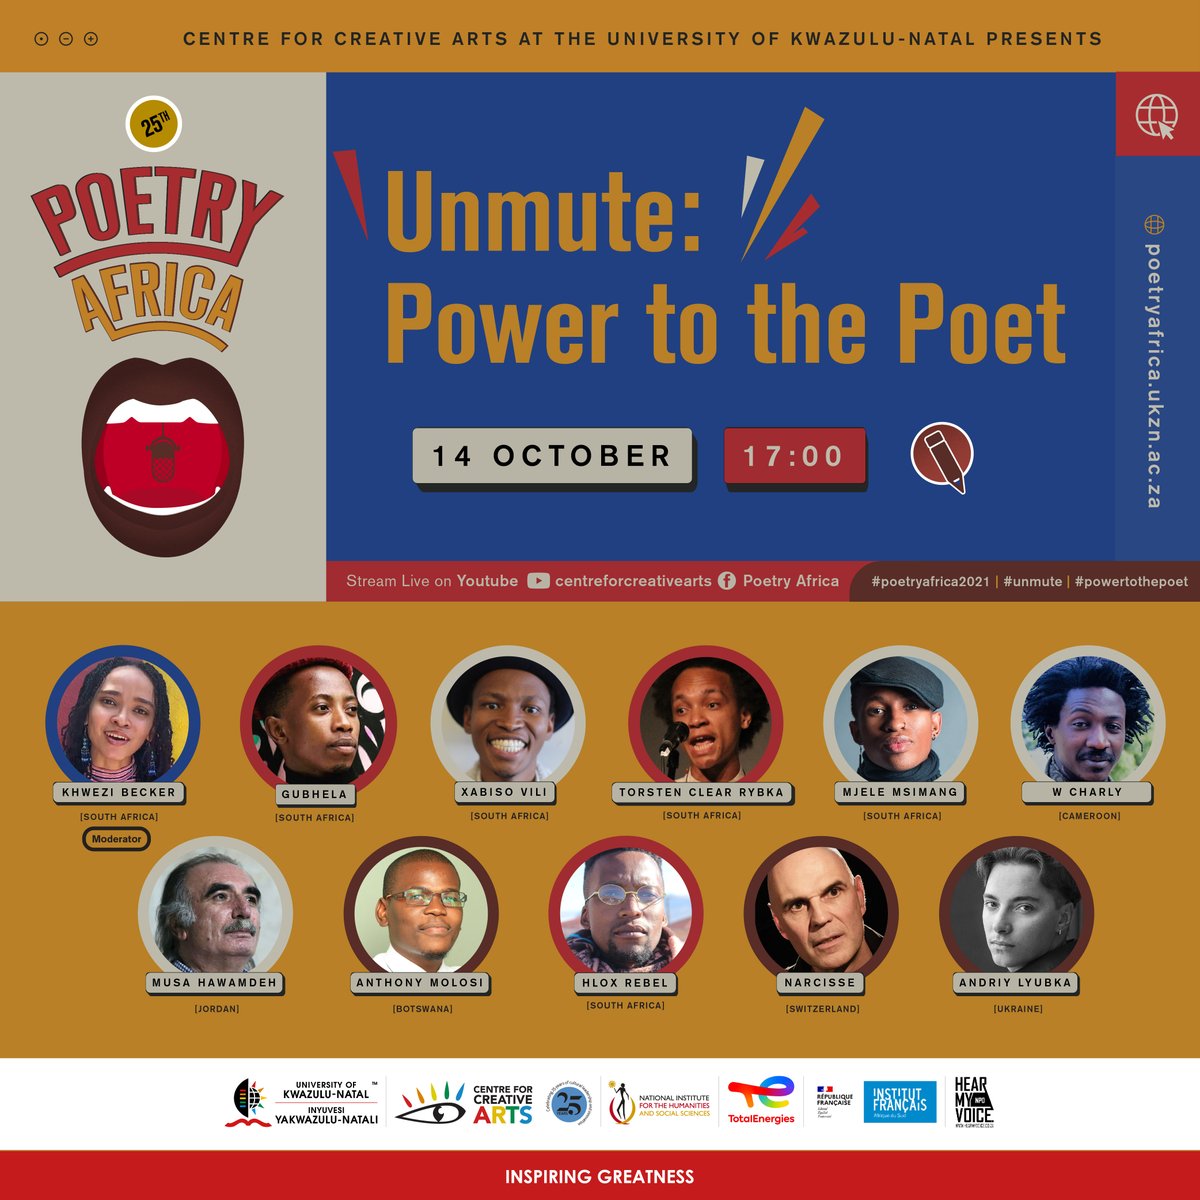 We are going to set the virtual stage ablaze at 5pm #Unmute: #PowertothePoet

Poets: @Gubhela_Gubhela, #MusaHawamdeh, @Xabiso_Vili, #anthonymolosi , @hloxrebel, @socleart, @narcisseslam, @scyborgje, @andrijlyubka, @charly_wassing

#PoetryAfrica2021